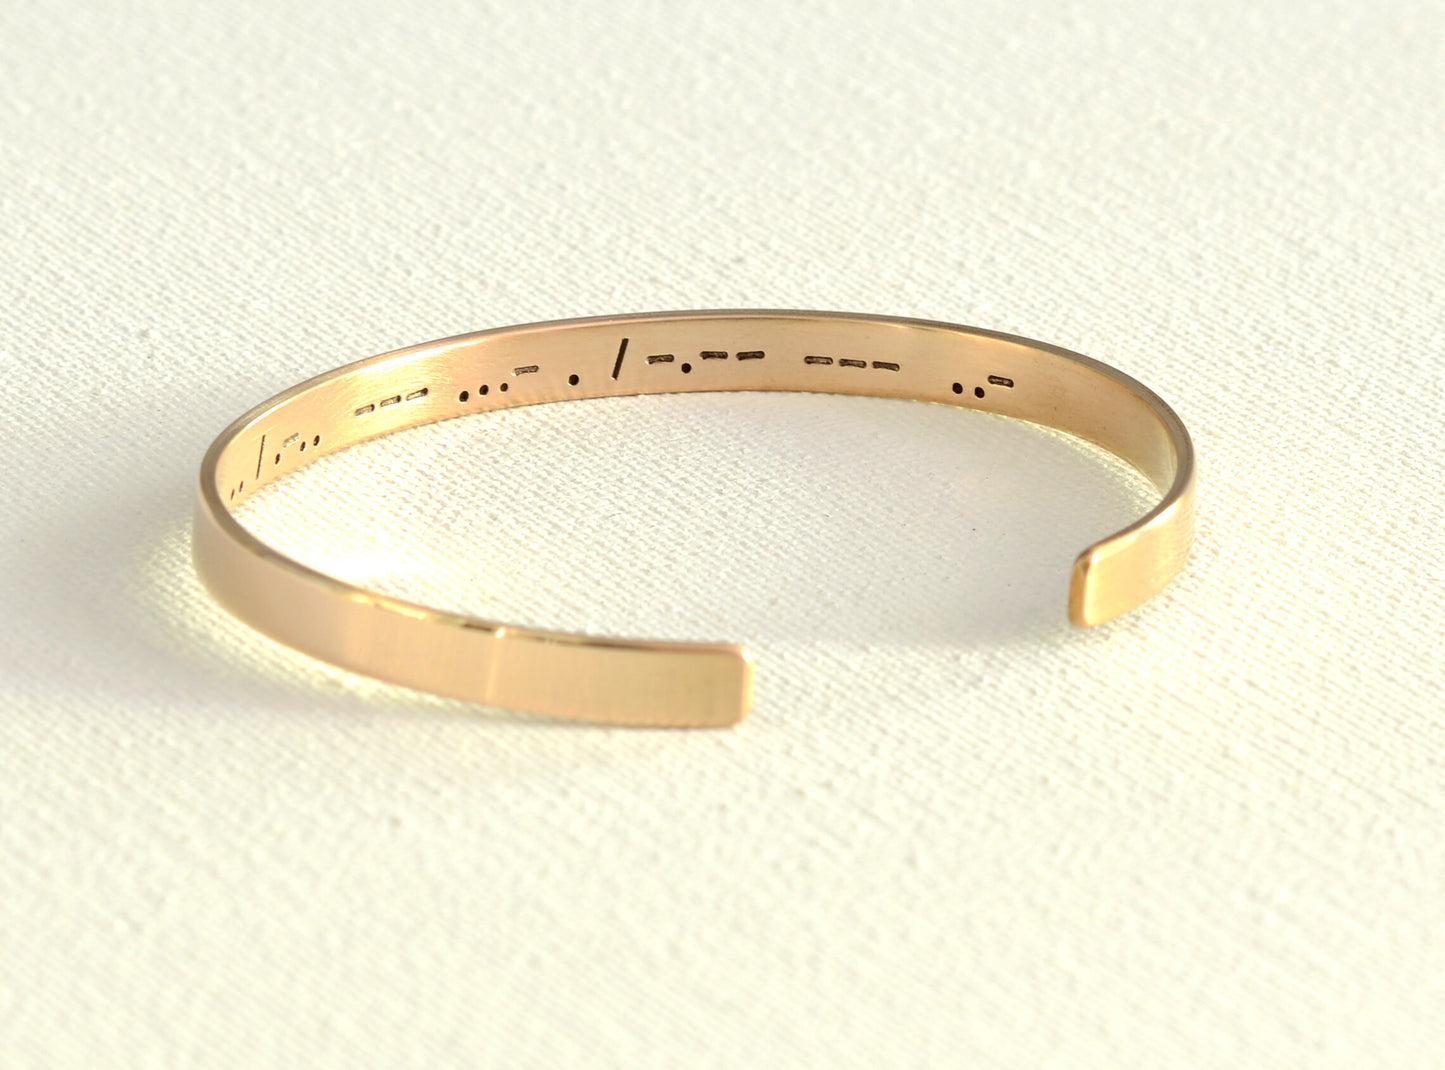 Morse code cuff bracelet in various metals